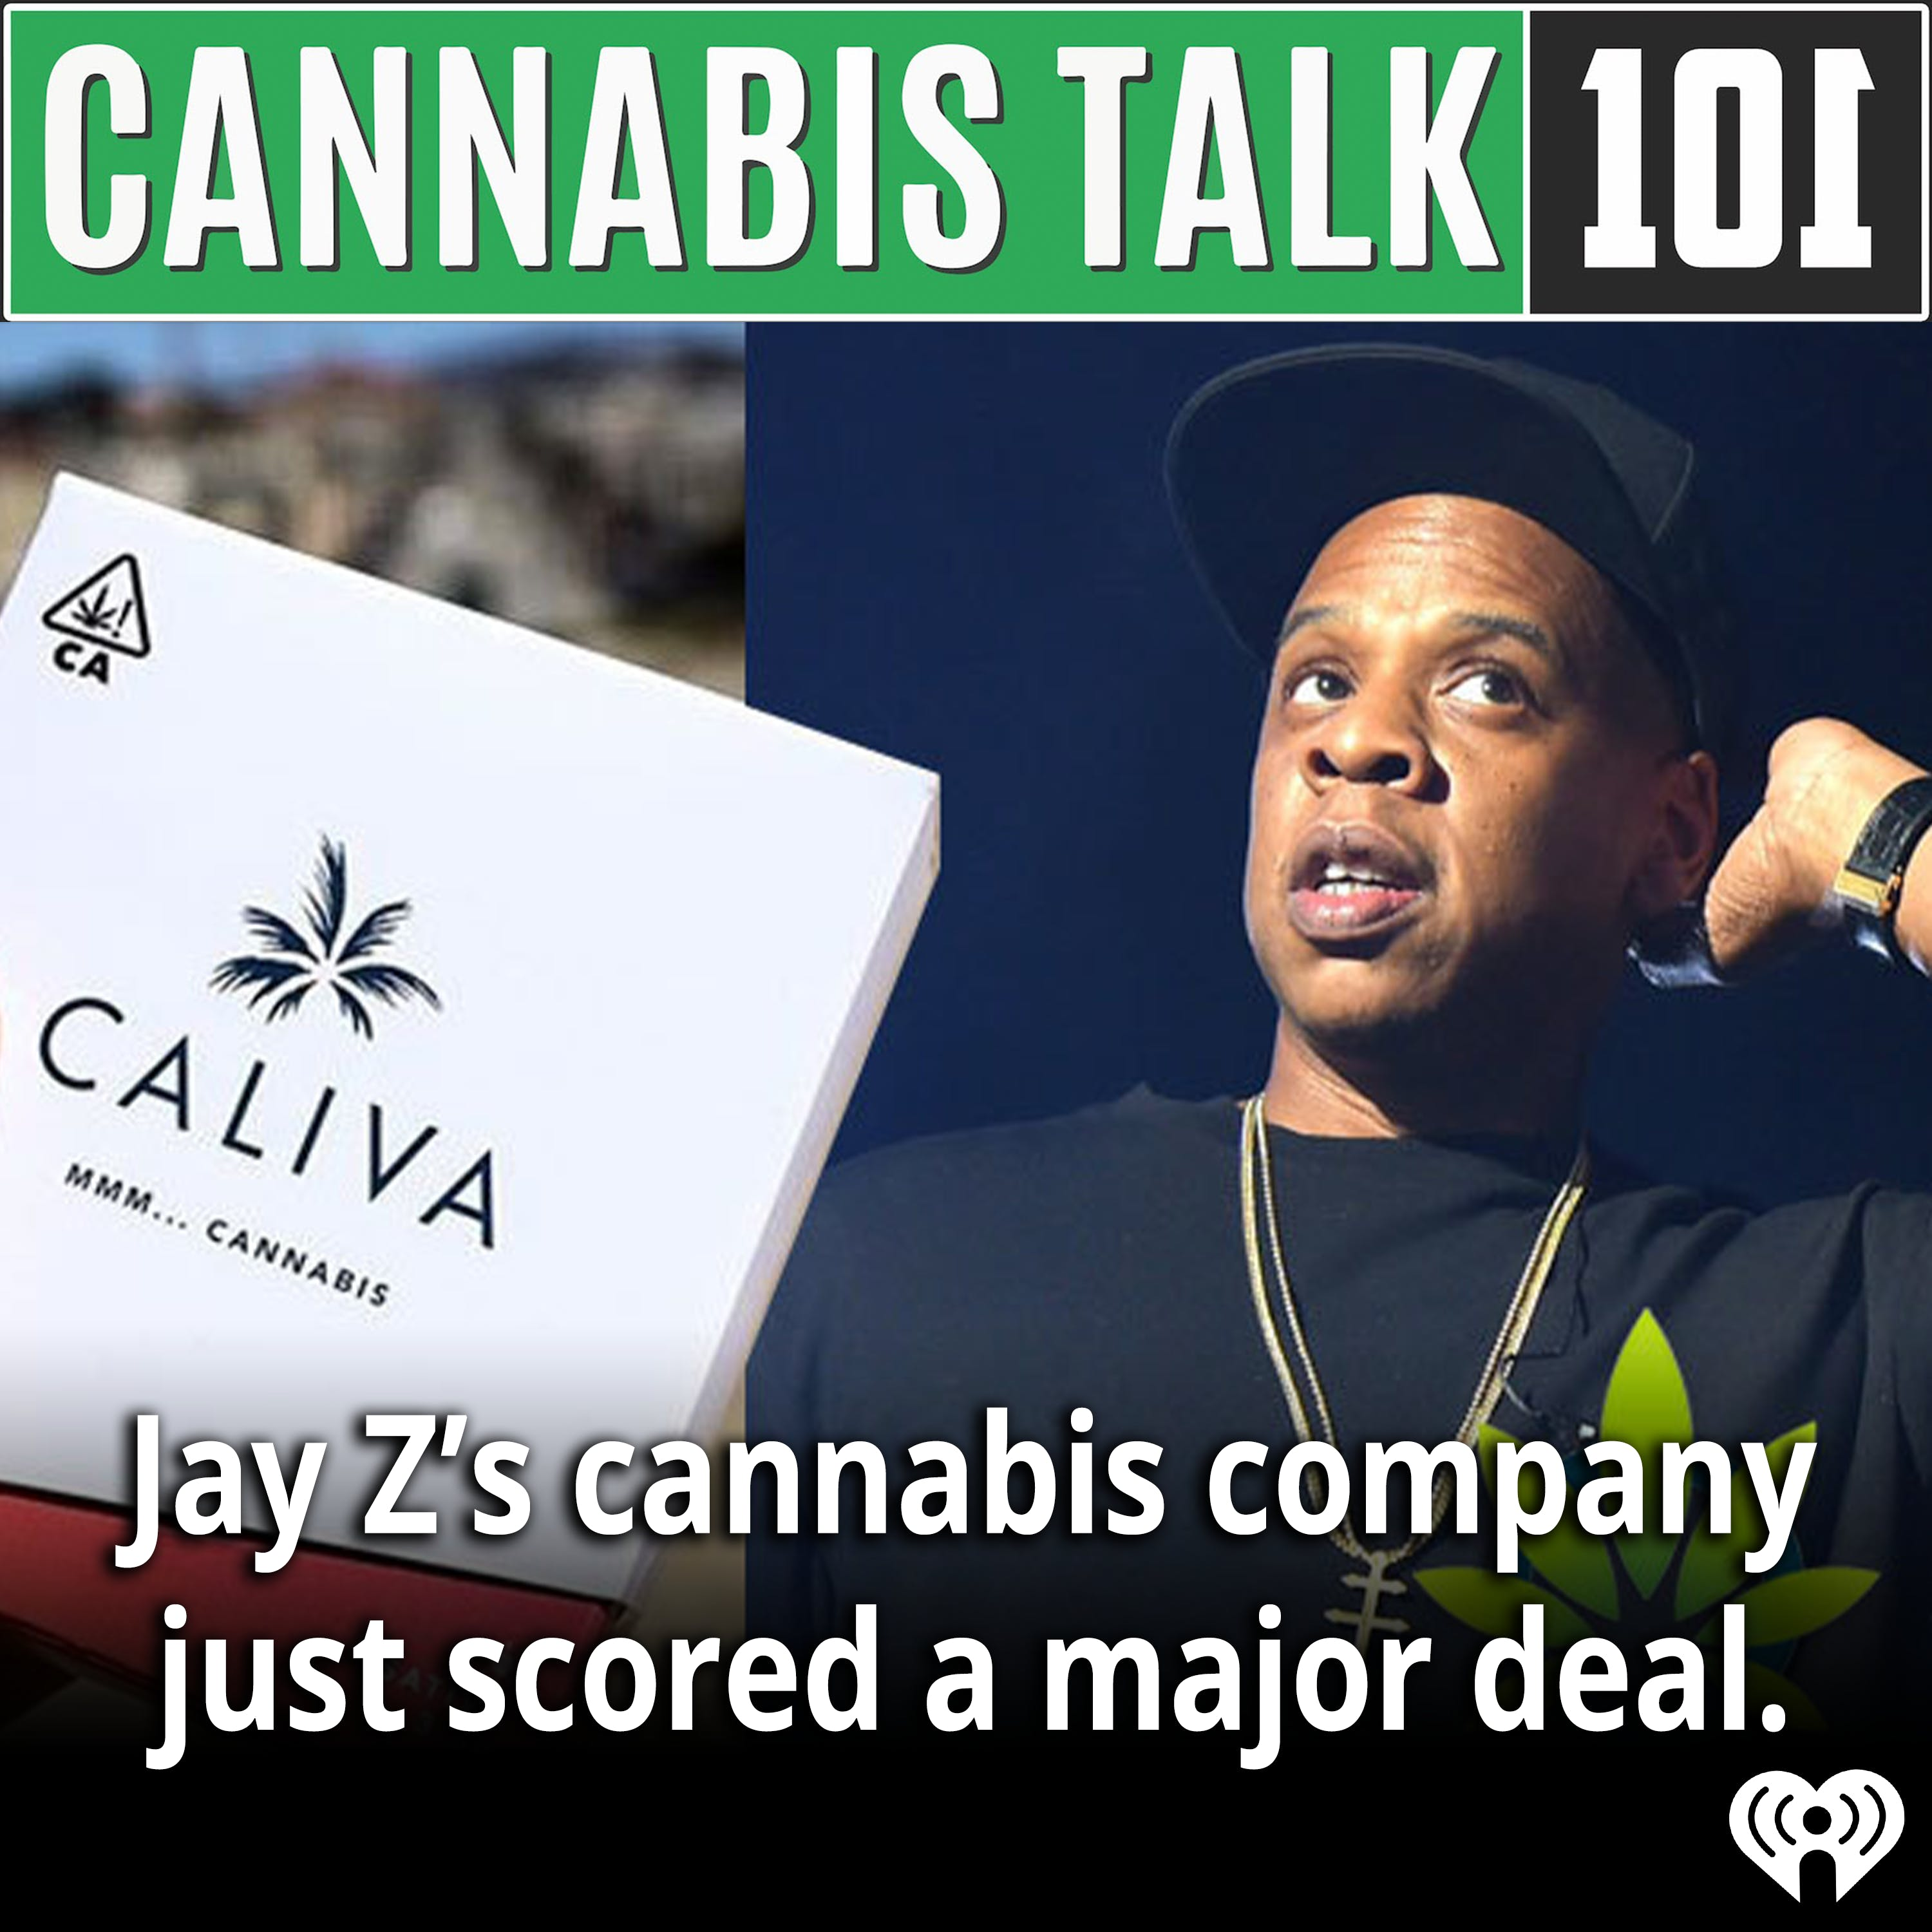 Jay Z’s cannabis company just scored a major deal.